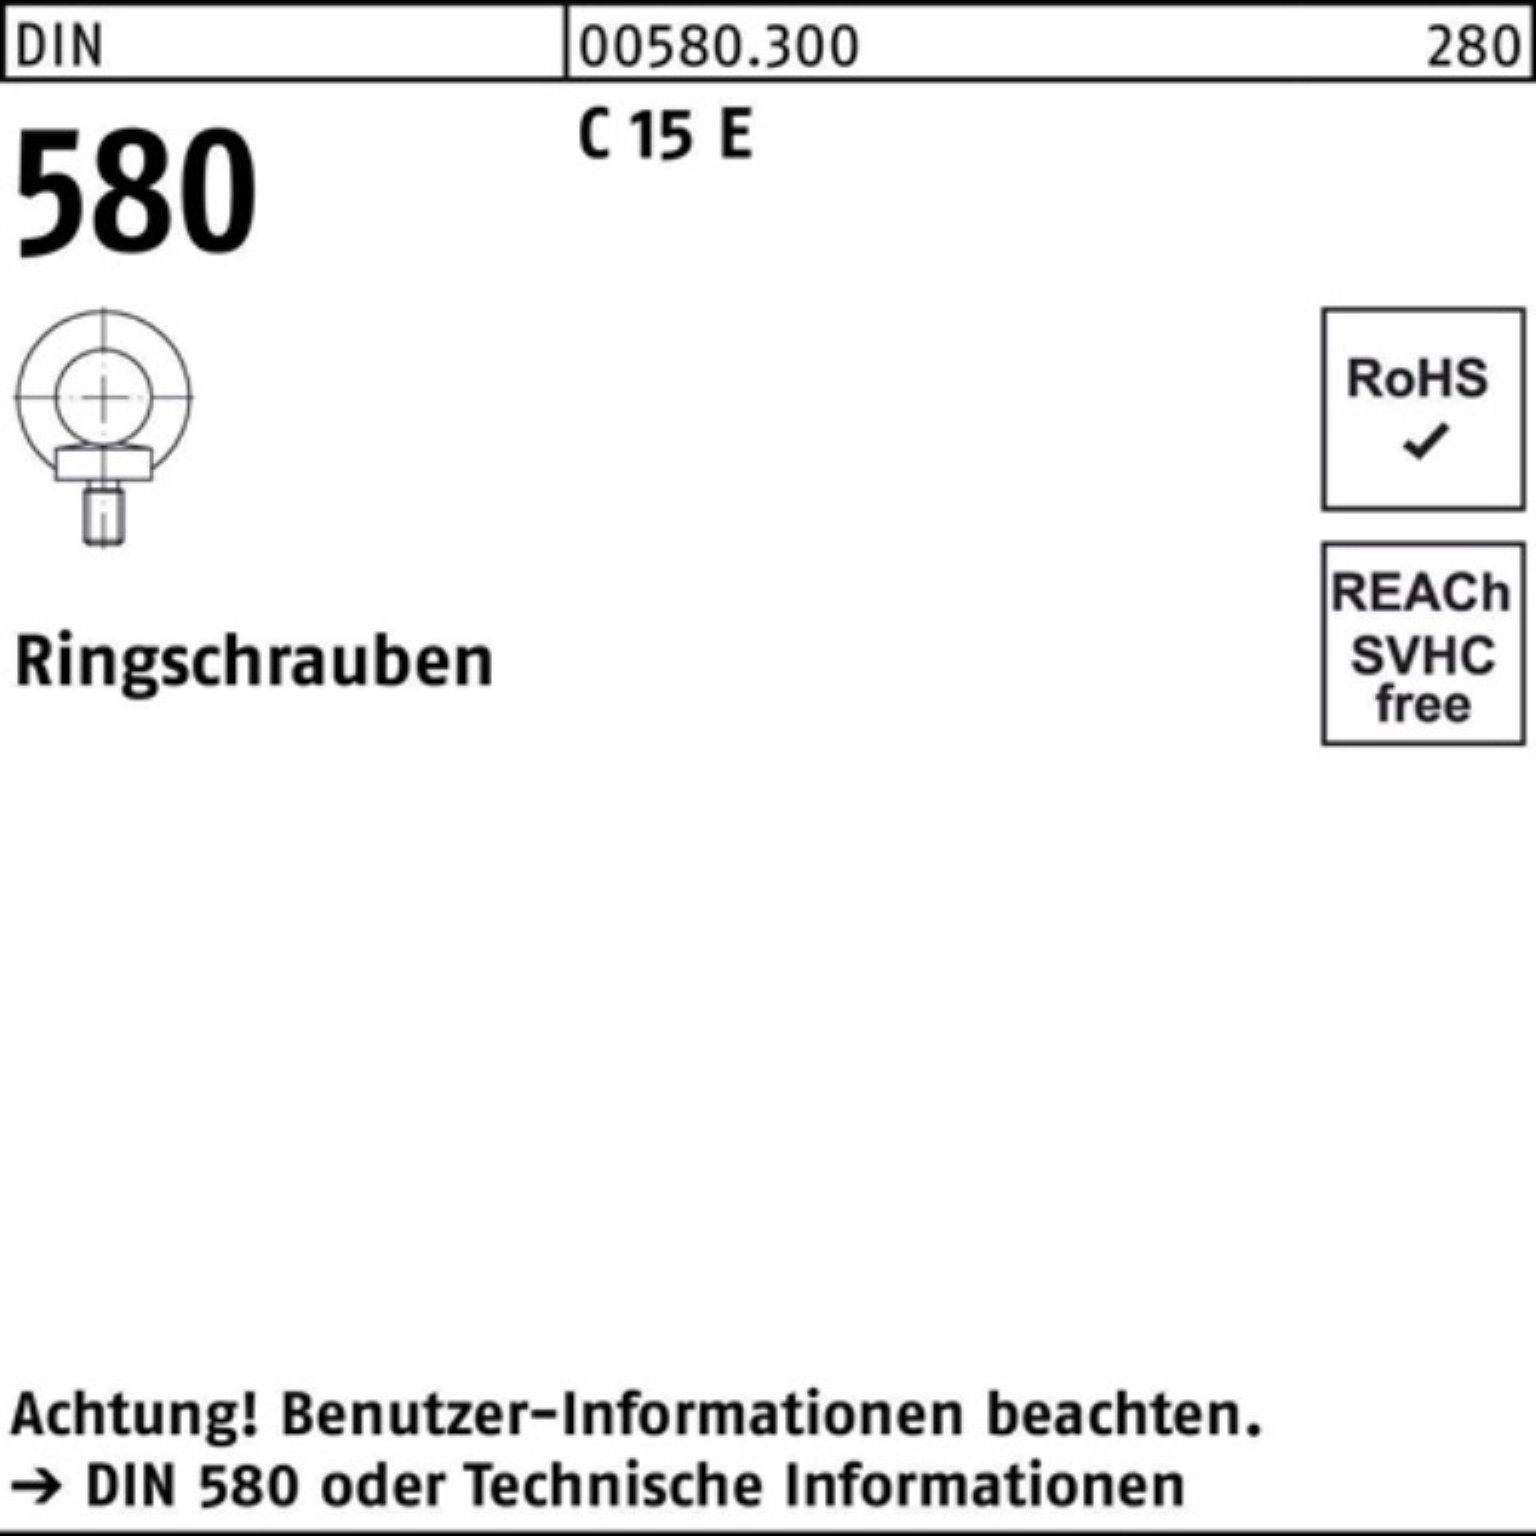 Reyher Schraube Ringschraube E DIN E C 15 C 580 M12 Pack Stück 15 Ri 580 10 100er DIN